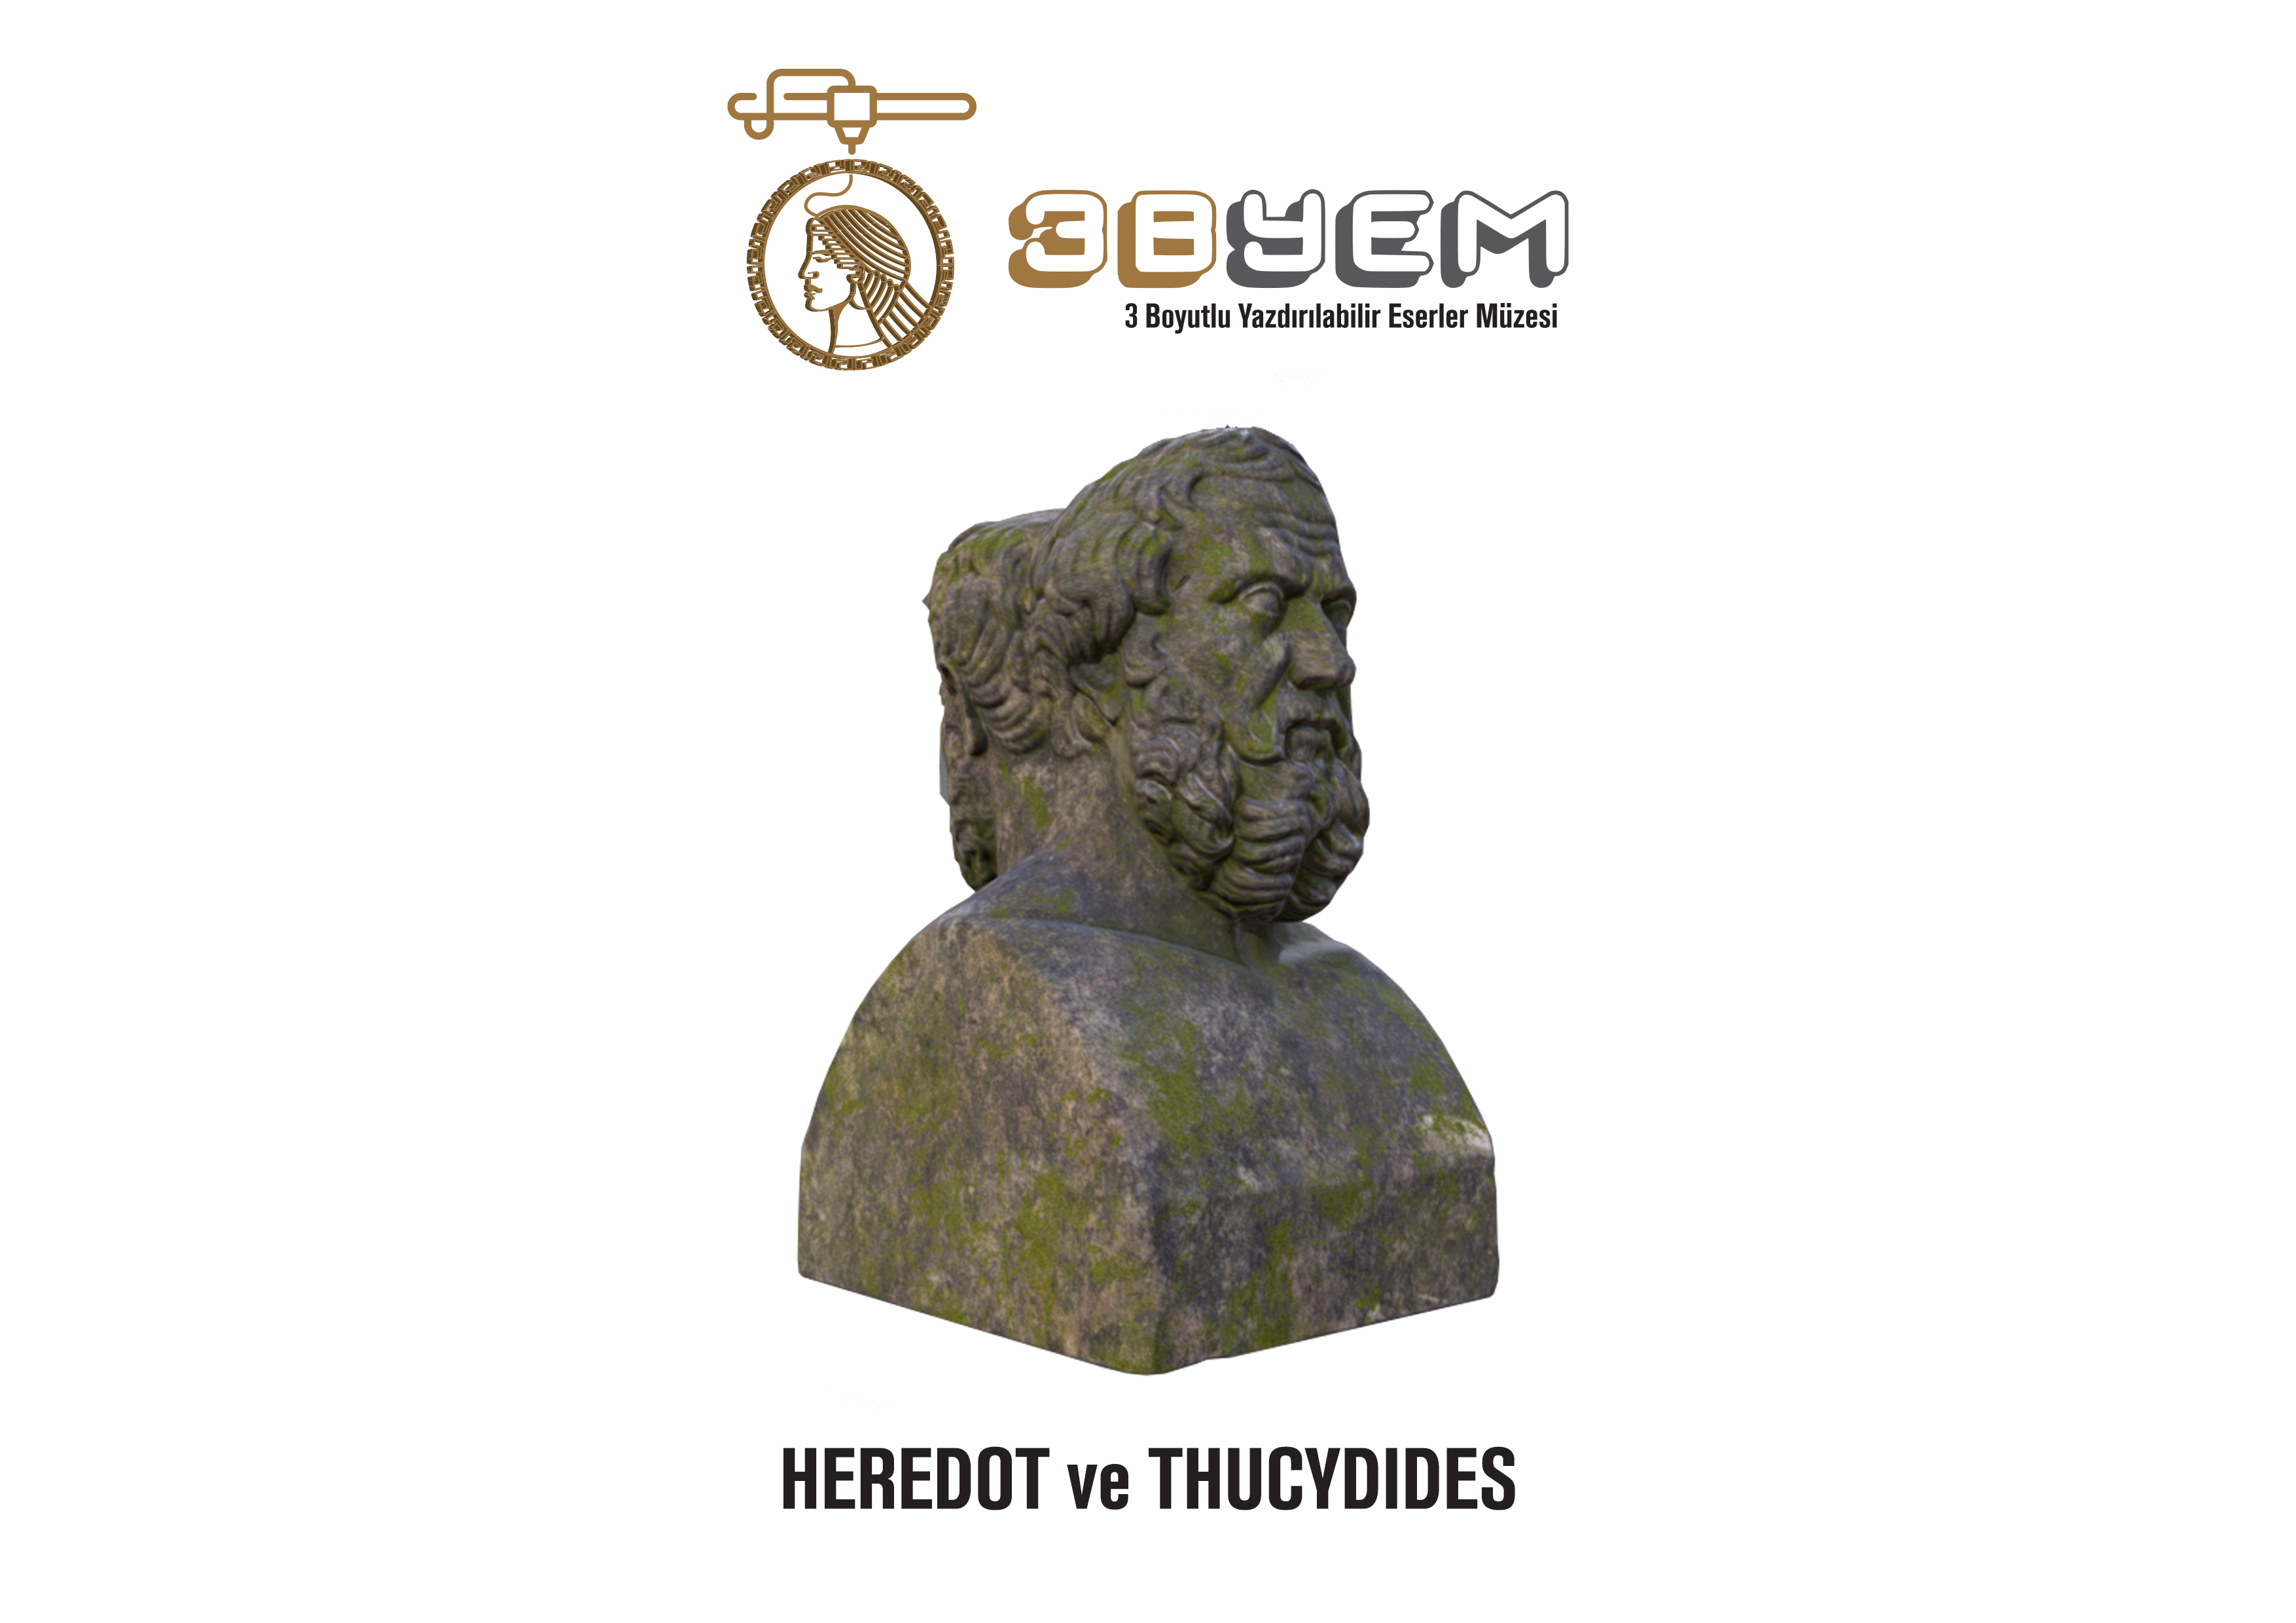 Heredot ve Thucydides